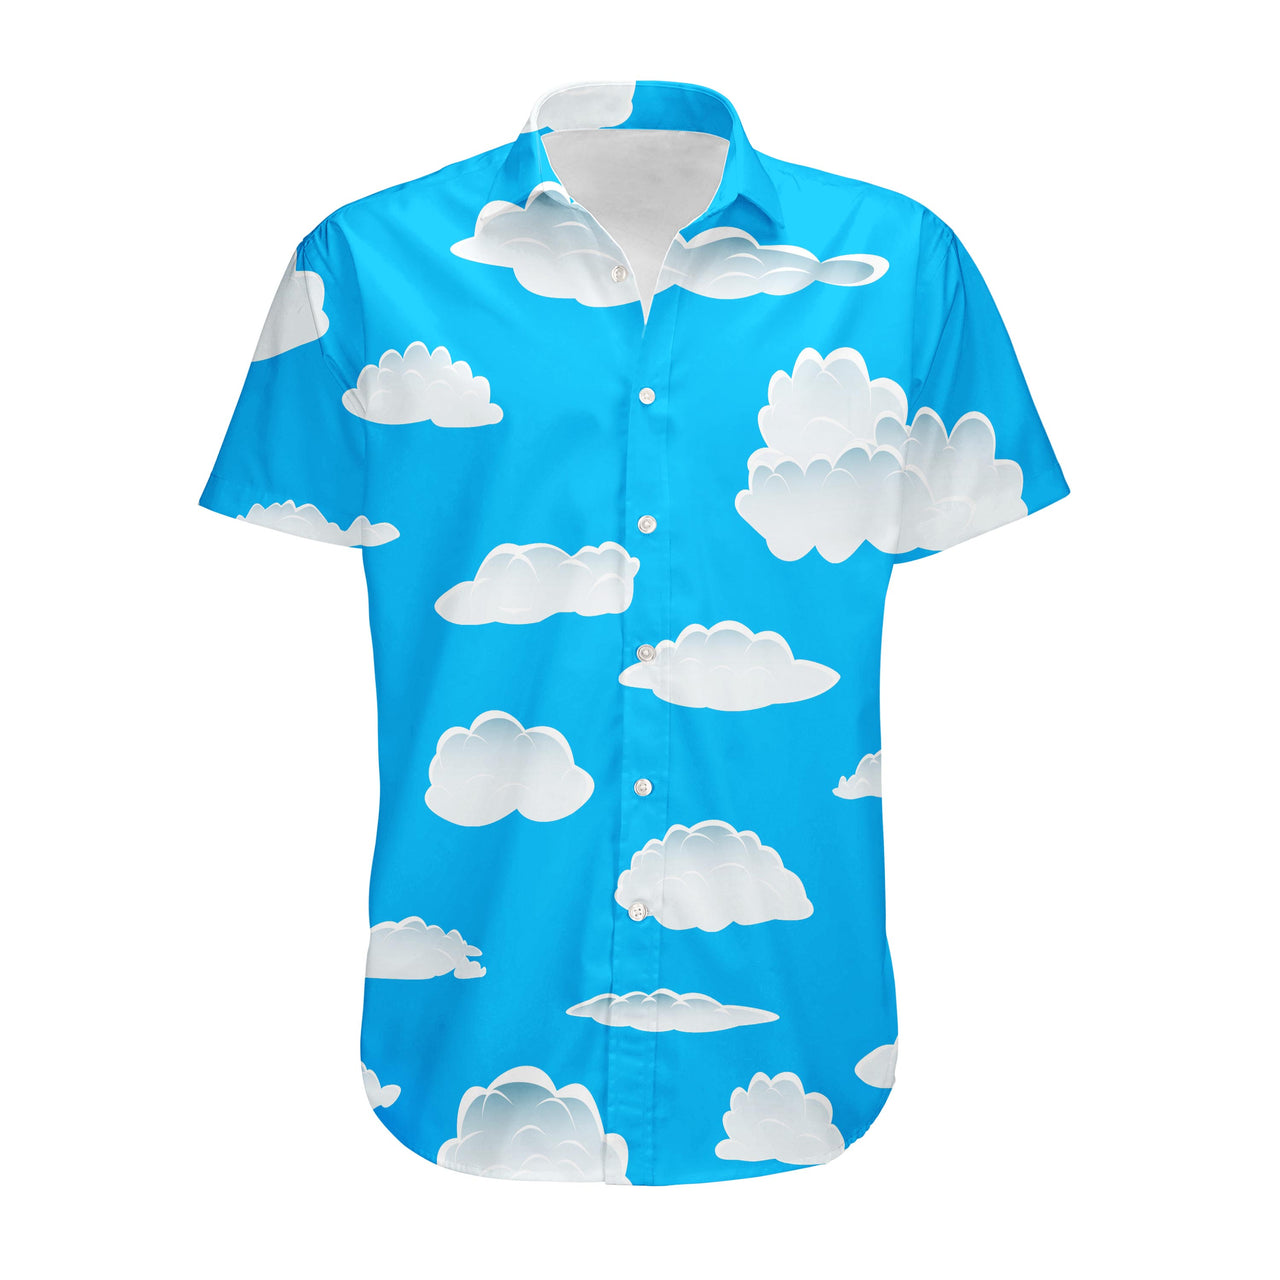 Amazing Clouds Designed 3D Shirts